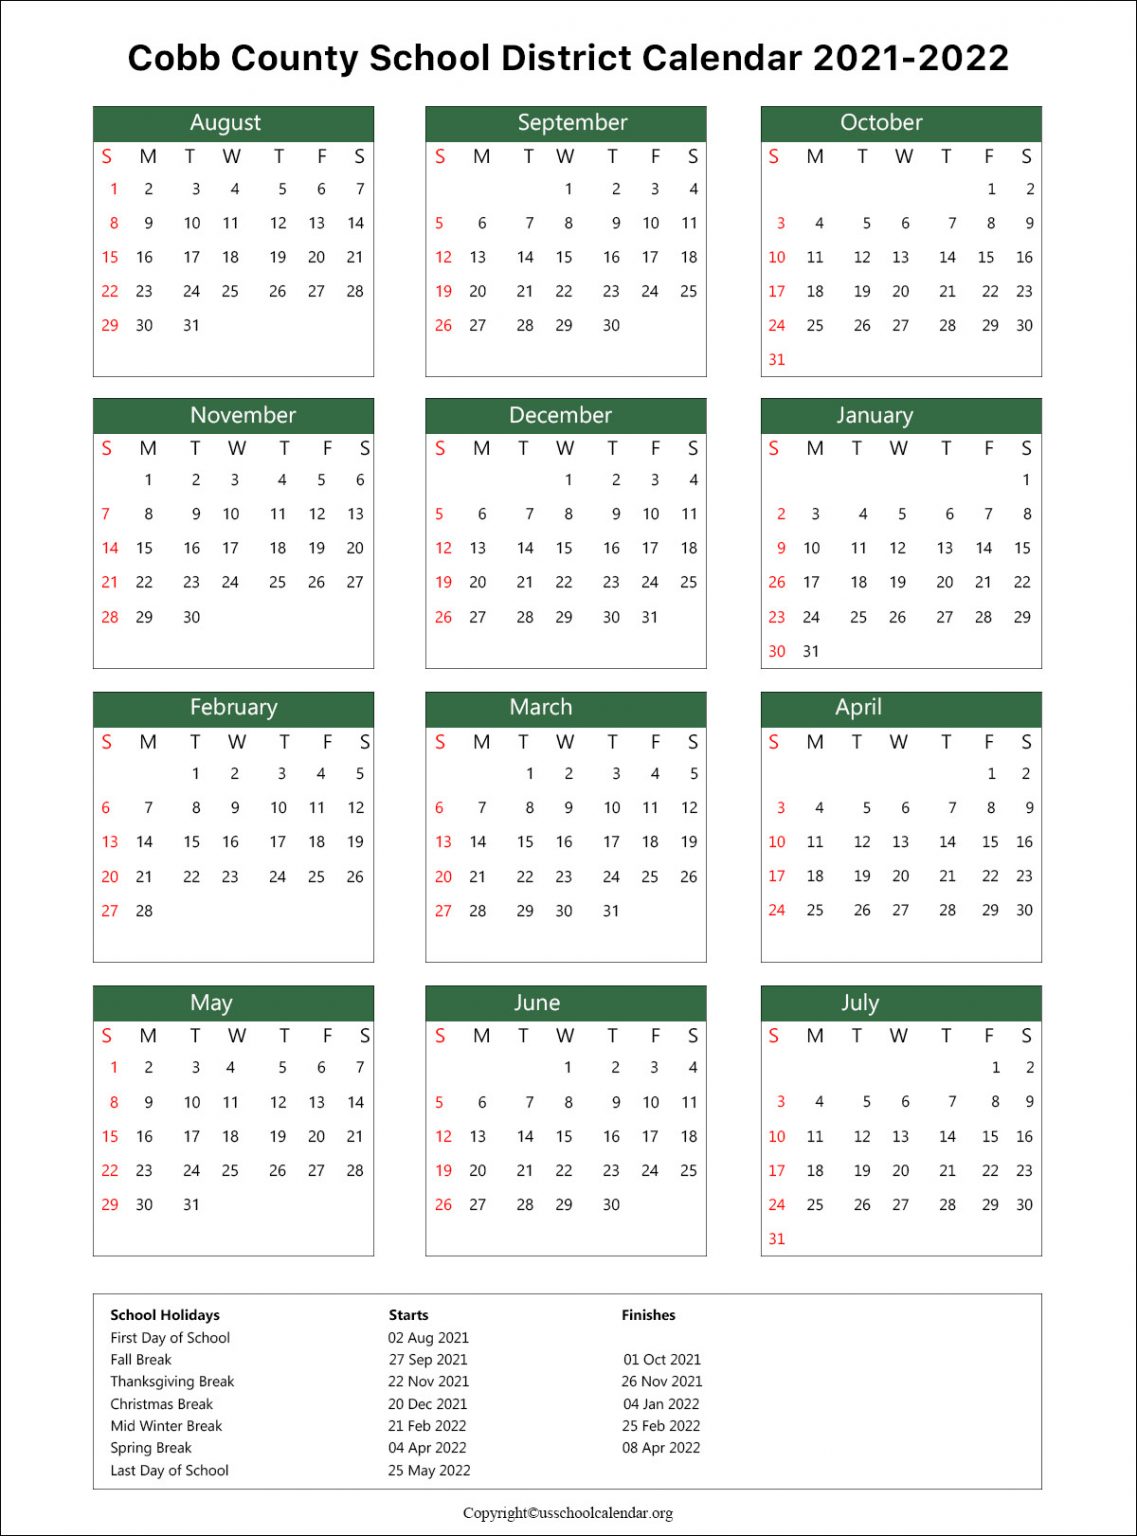 Cobb County School Calendar with Holidays 20212022